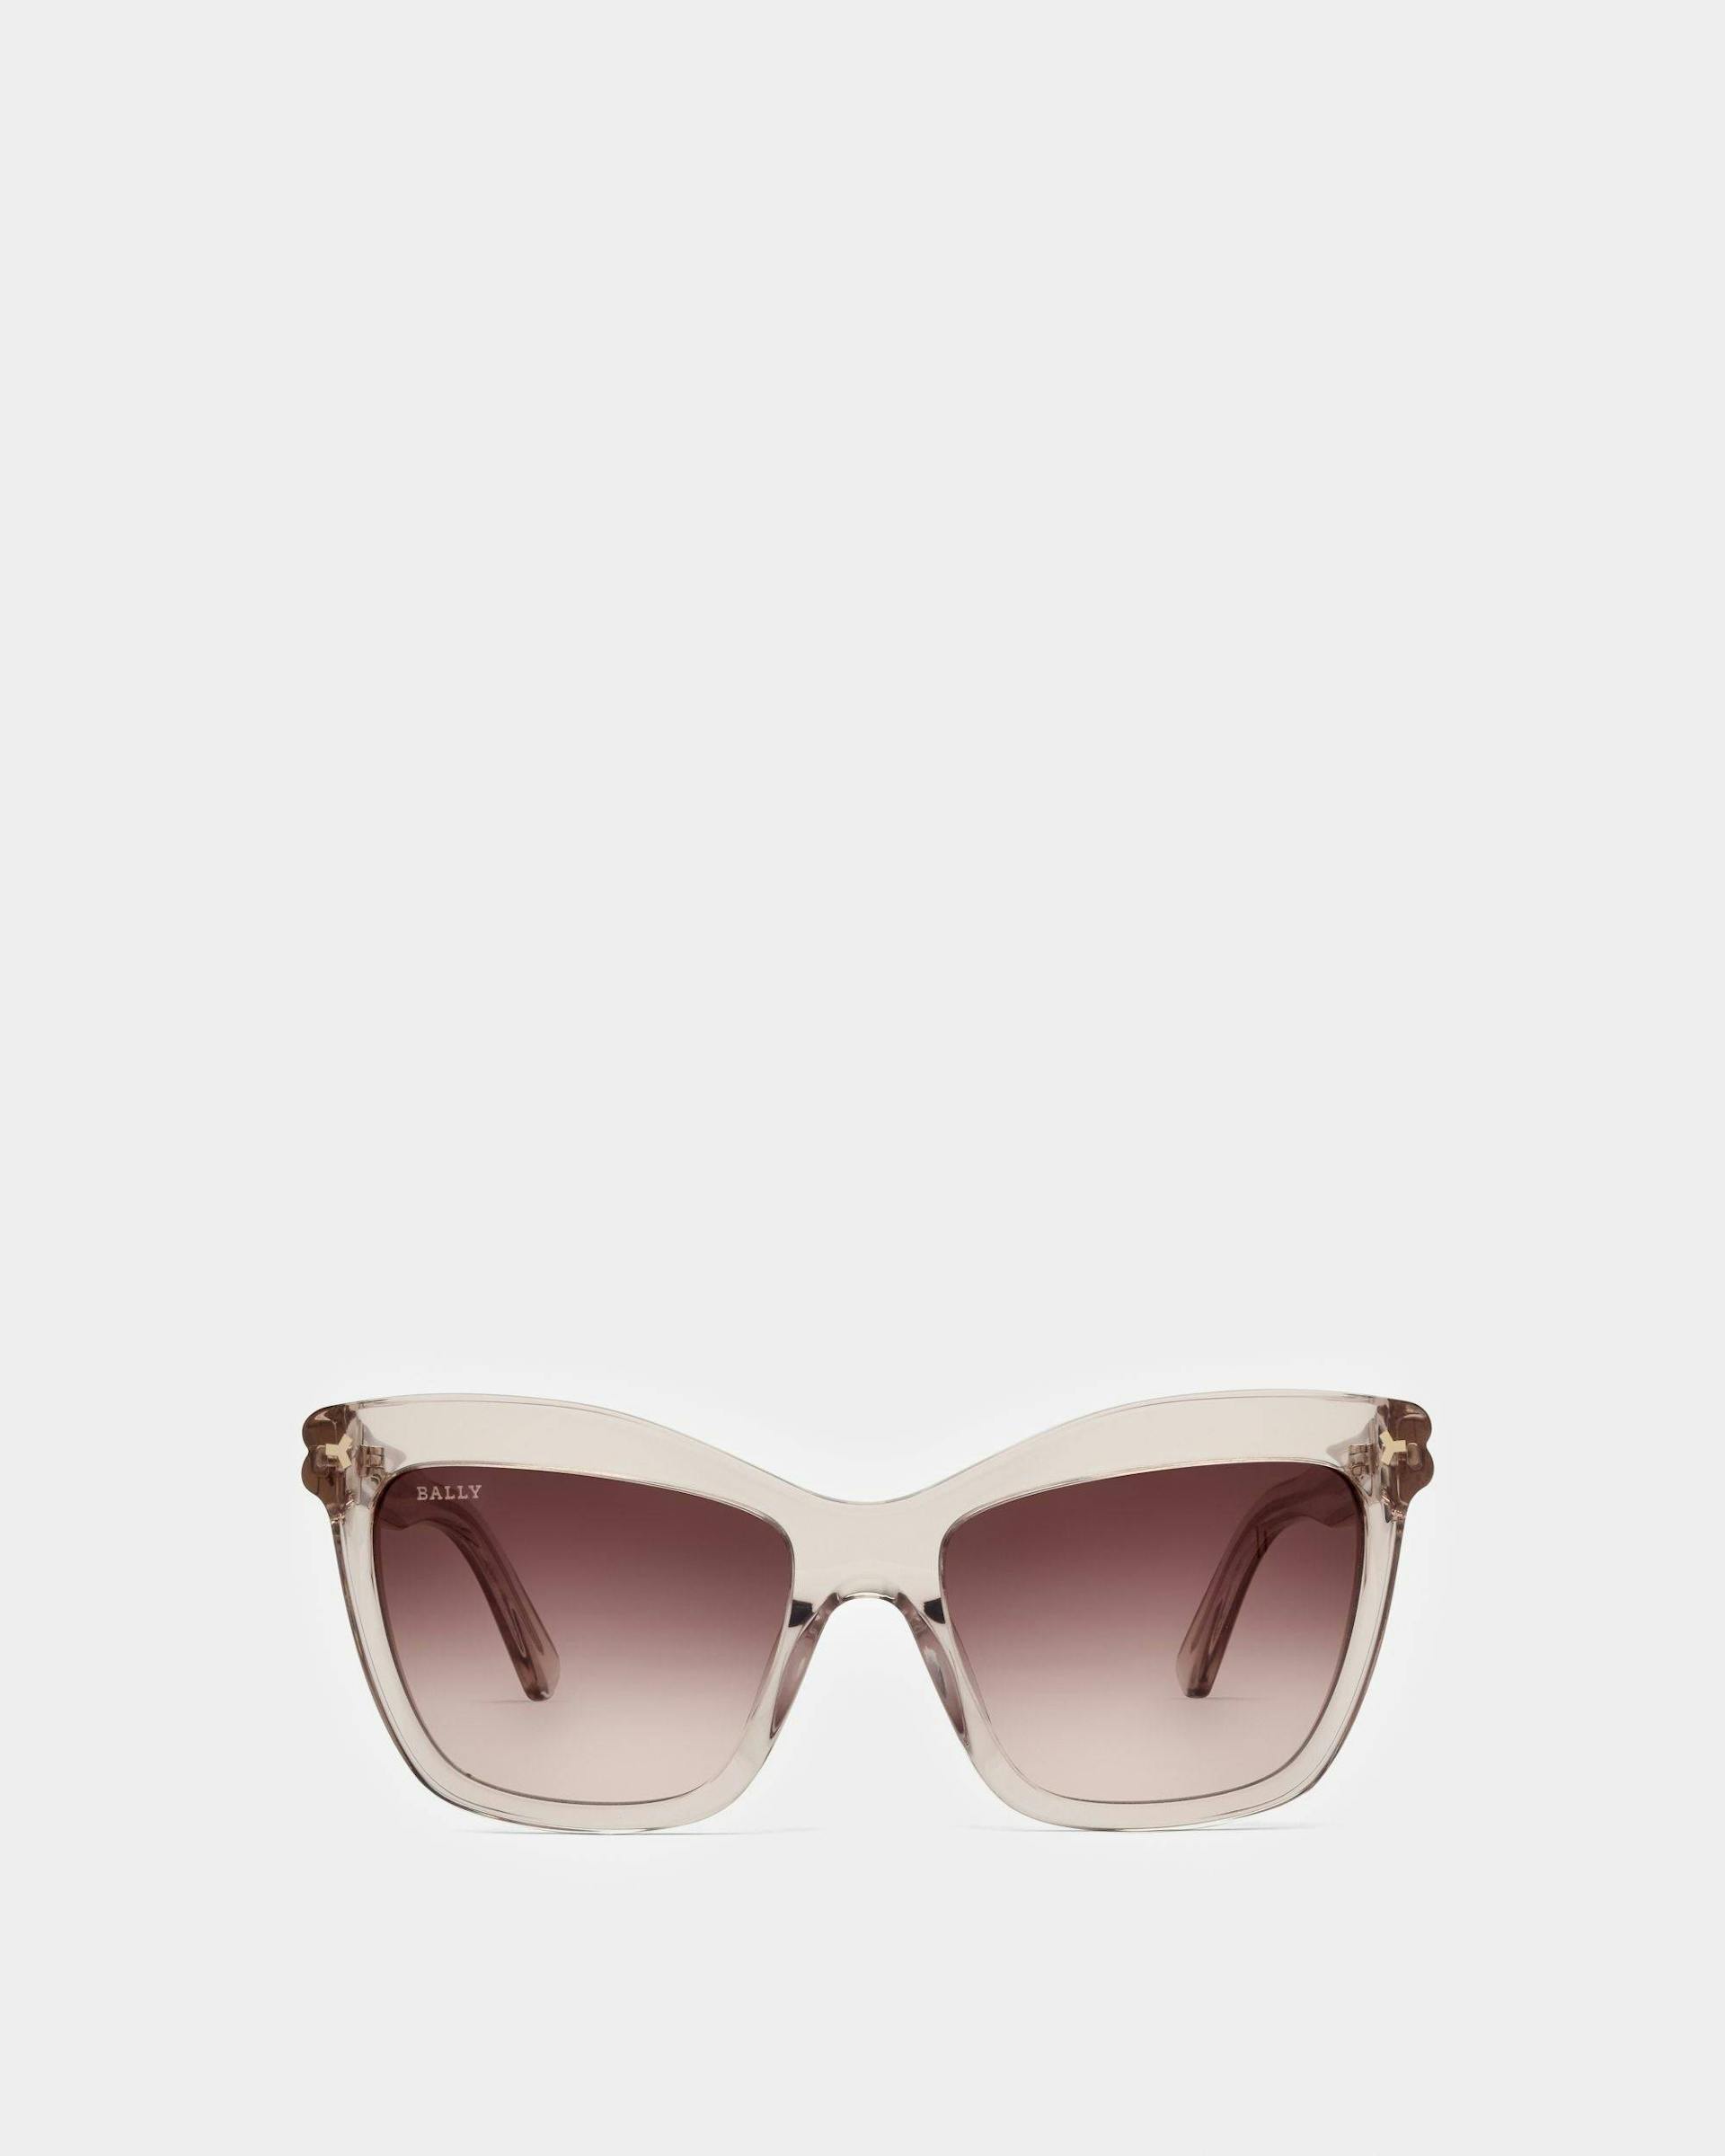 Babette Acetate Sunglasses In Shiny Beige & Brown Gradient Pink Lens - Women's - Bally - 01